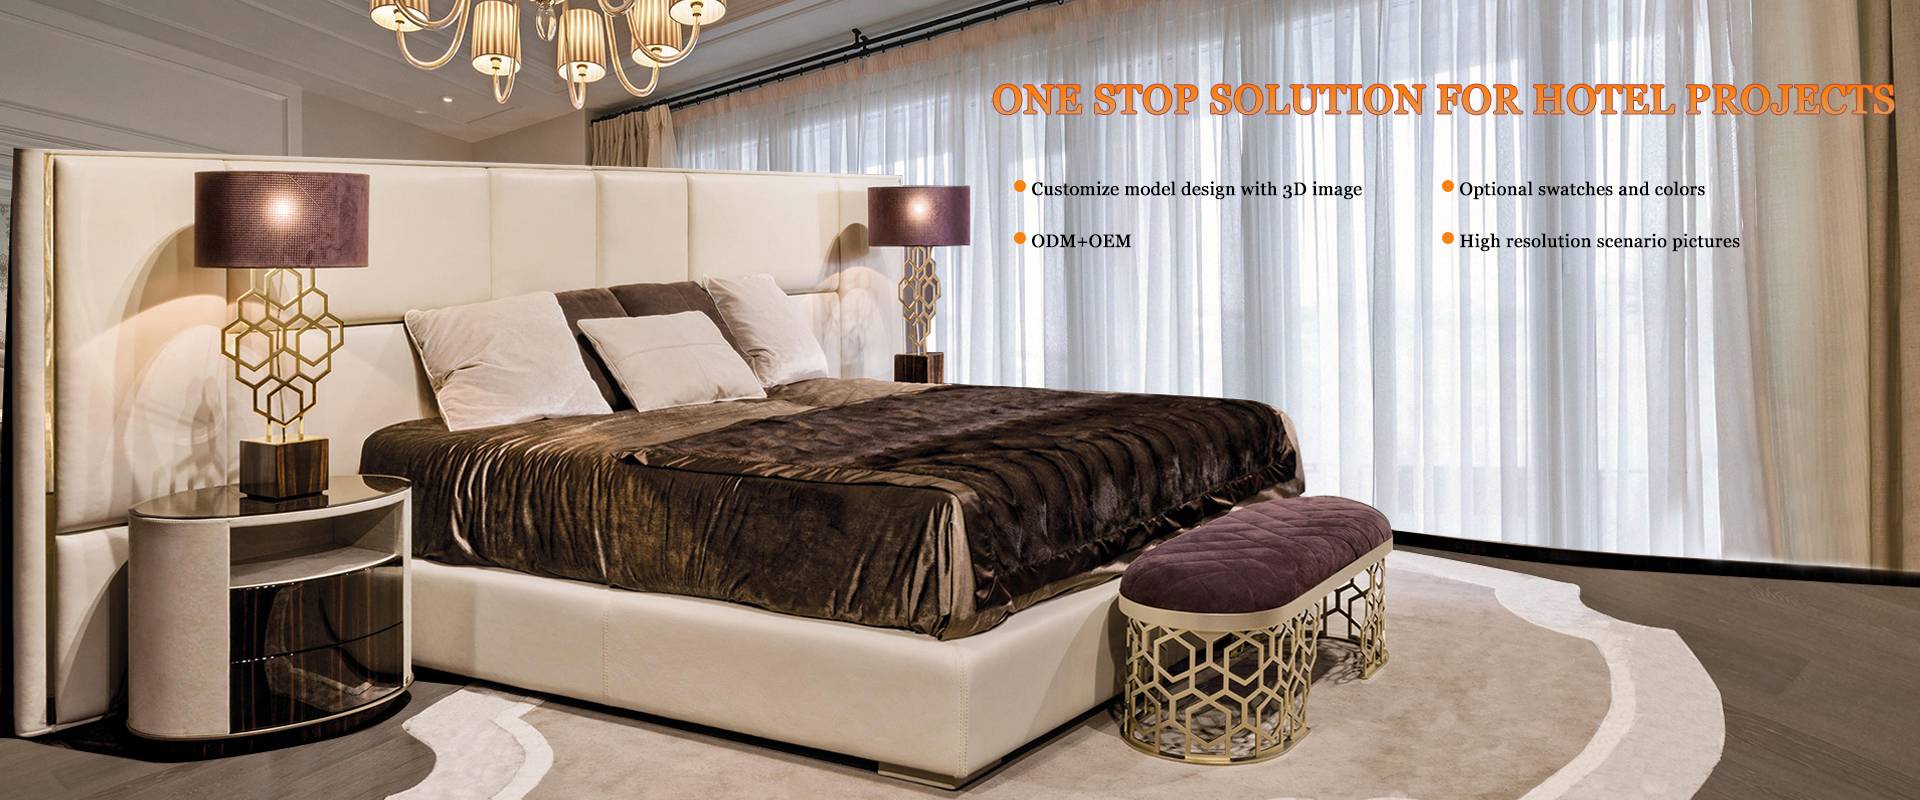 5 star hotel bed furniture